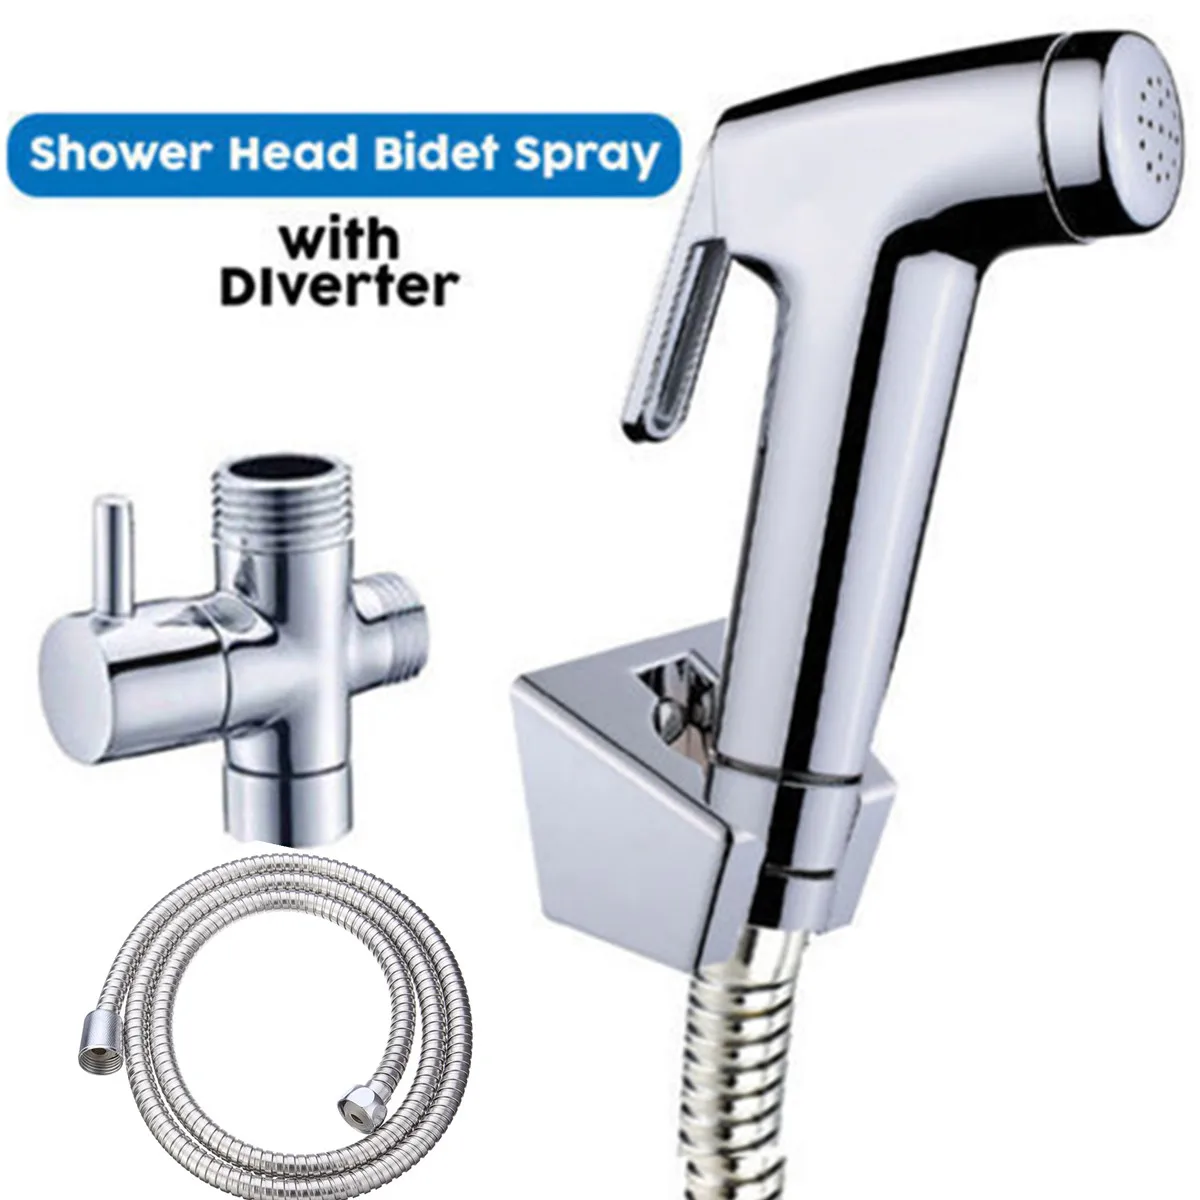 

Stainless Steel Hand Held Shower Head Toilet Bidet Sprayer Tap Set Portable Washer Jet Guns Seat Bidet Handheld Hygienic Spray